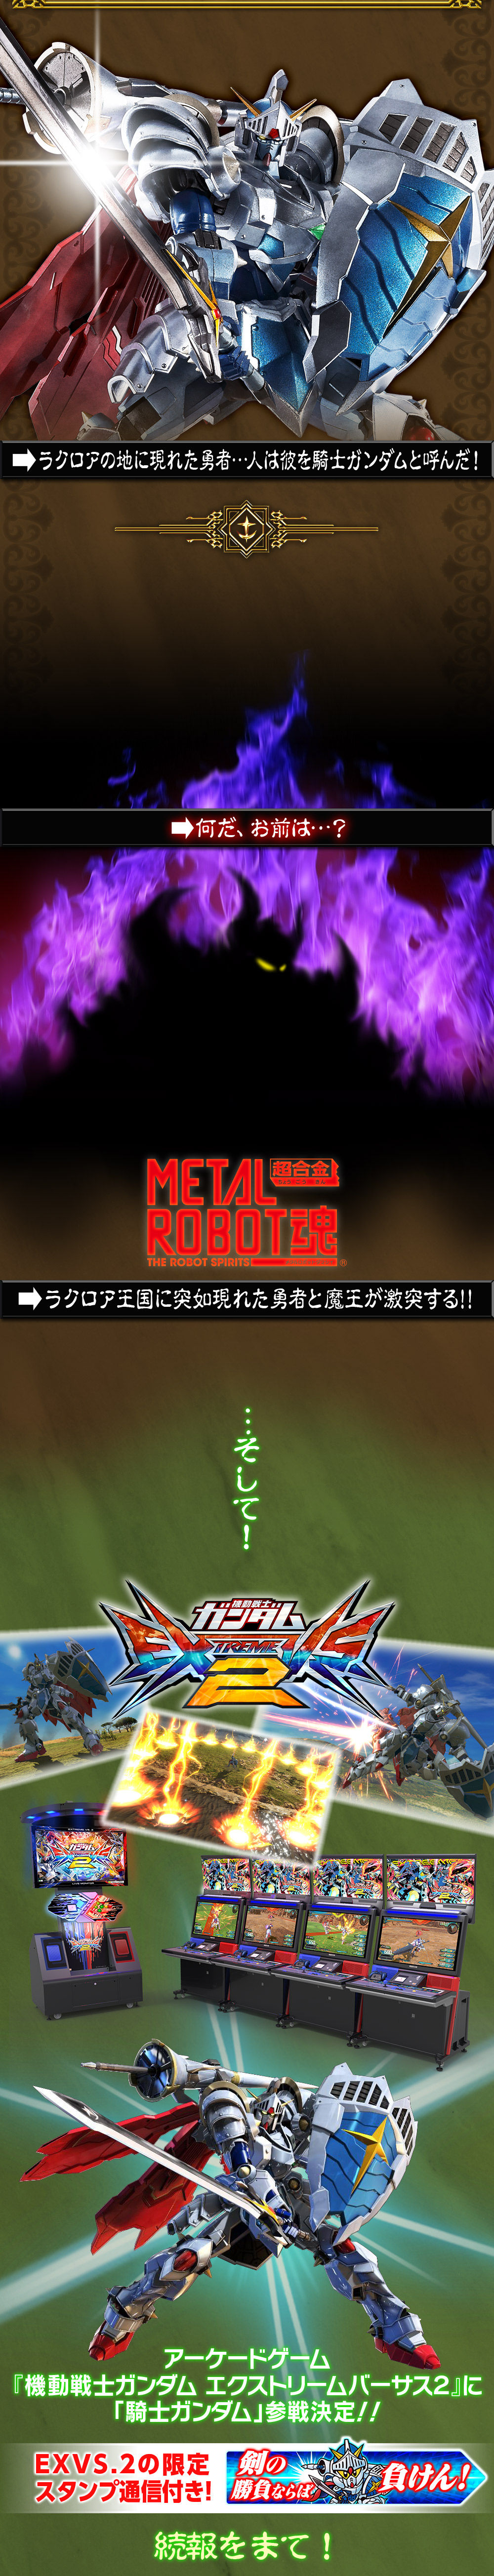 Metal Robot魂 Side Ms 騎士ガンダム ラクロアの勇者 機動戦士ガンダム 趣味 コレクション バンダイナムコグループ公式通販サイト